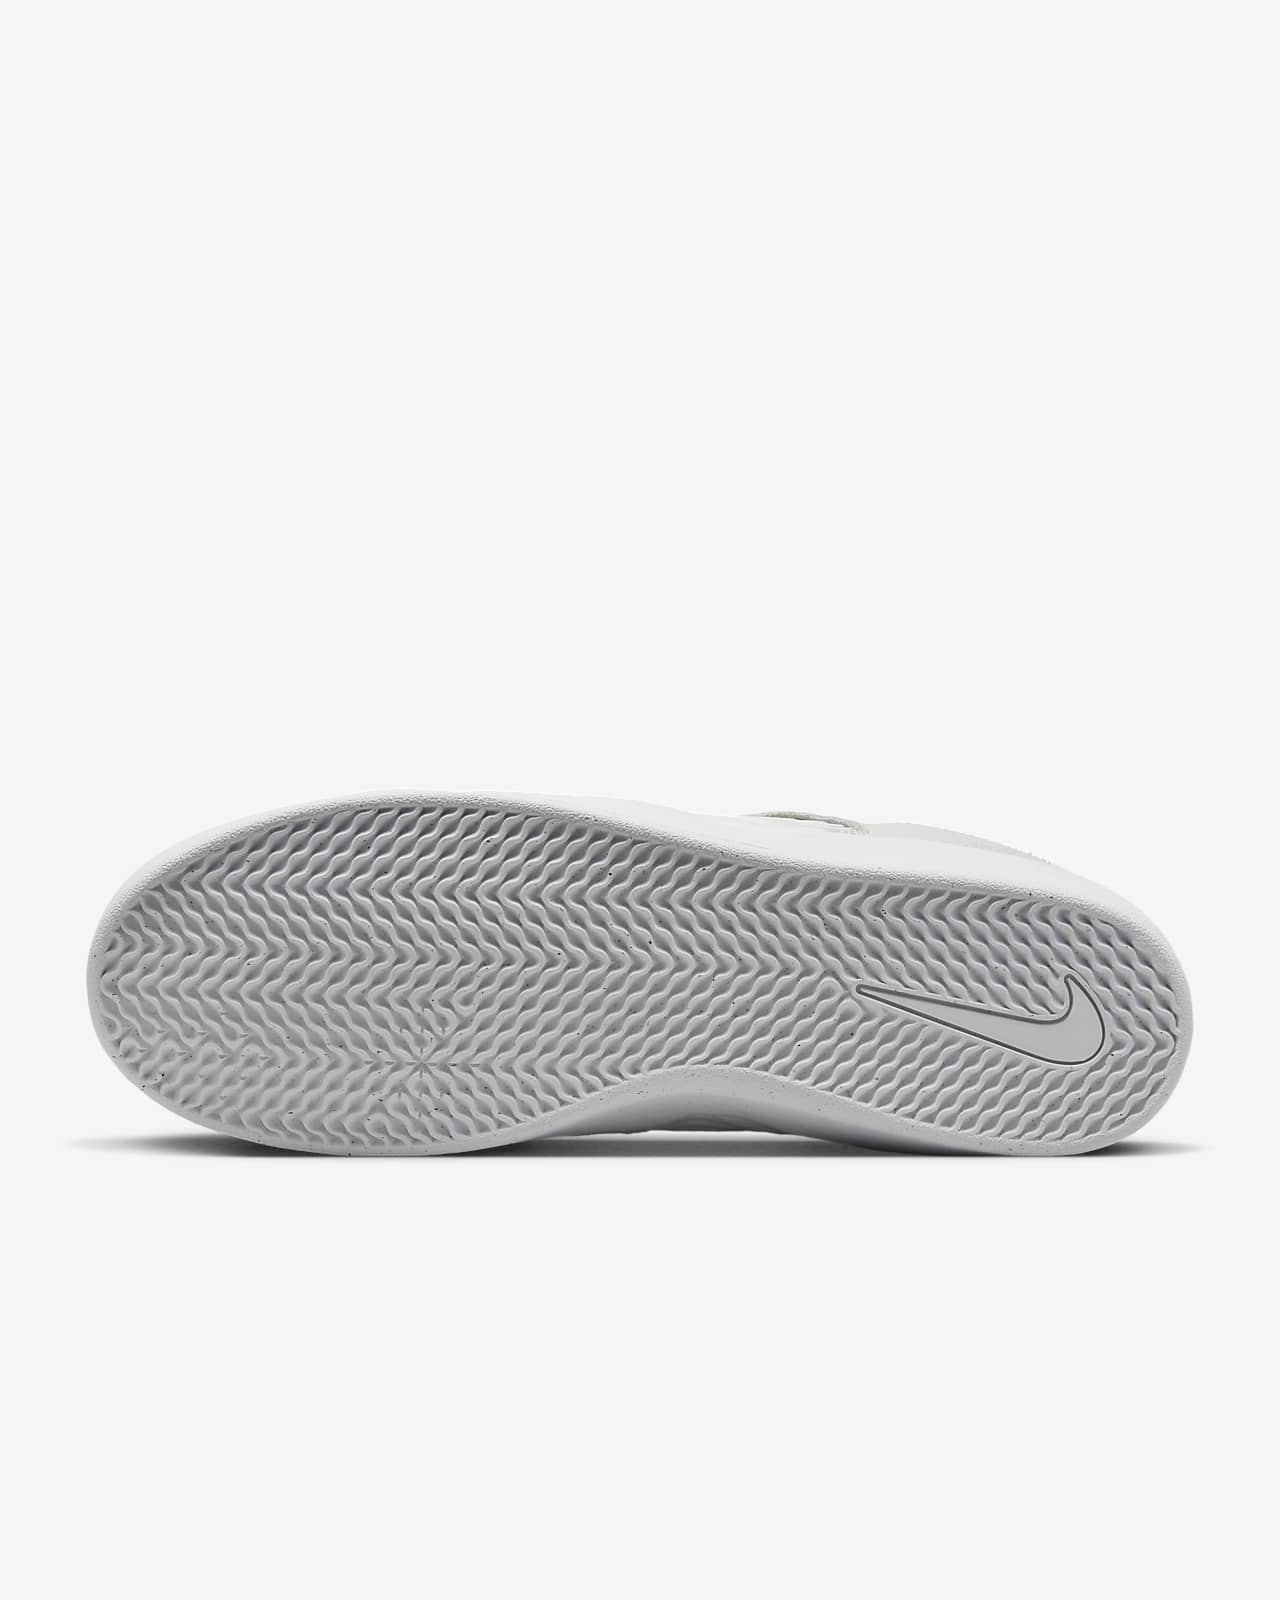 Nike SB Ishod Premium Zapatillas skateboard. ES